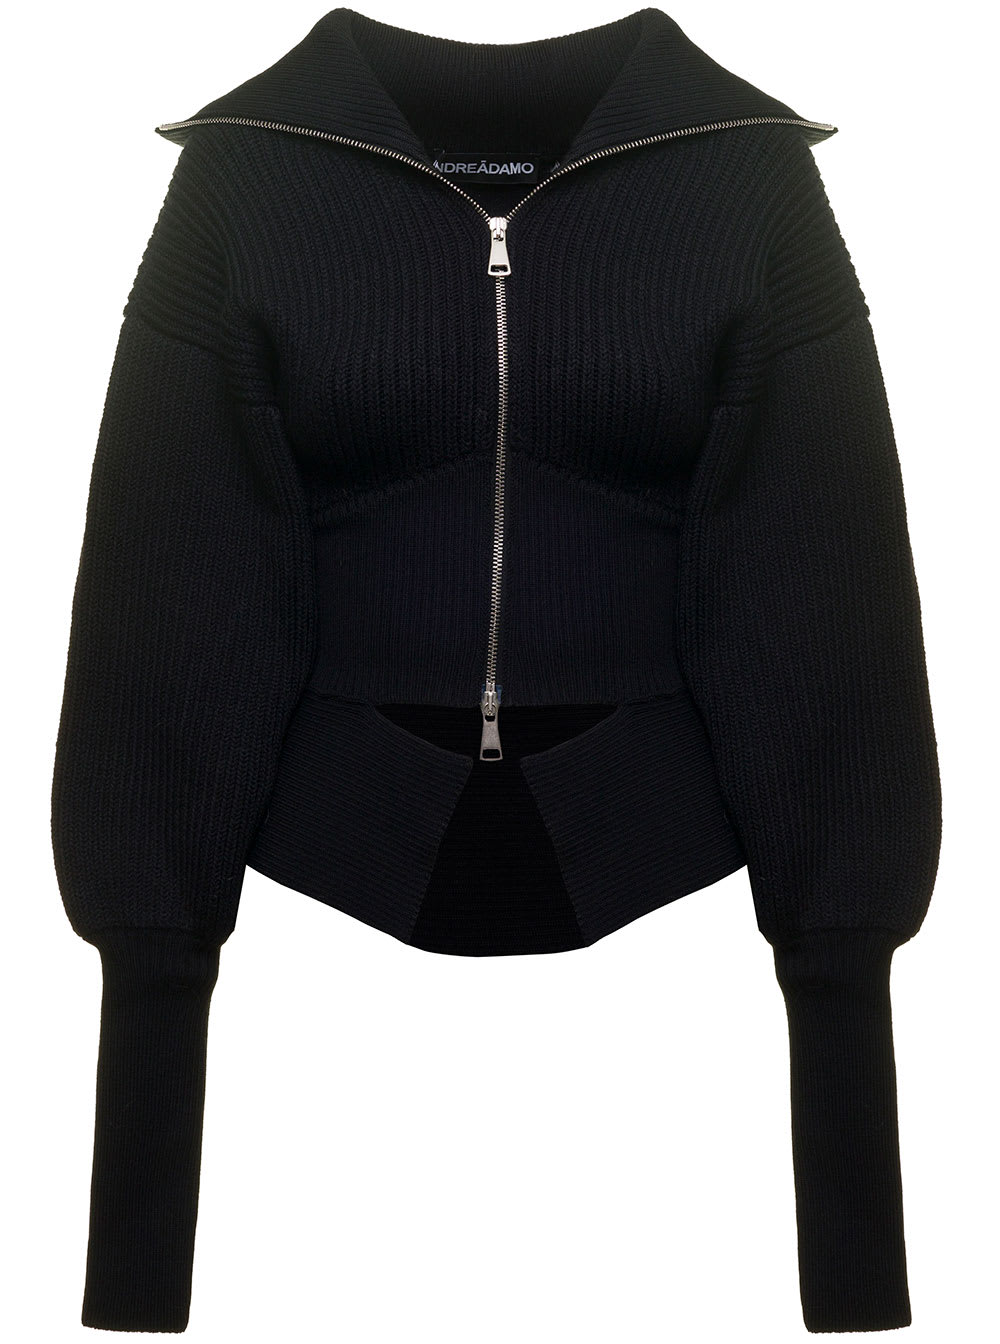 ANDREADAMO Black Sweater With Zip In Ribbed Wool Woman Andrea Adamo